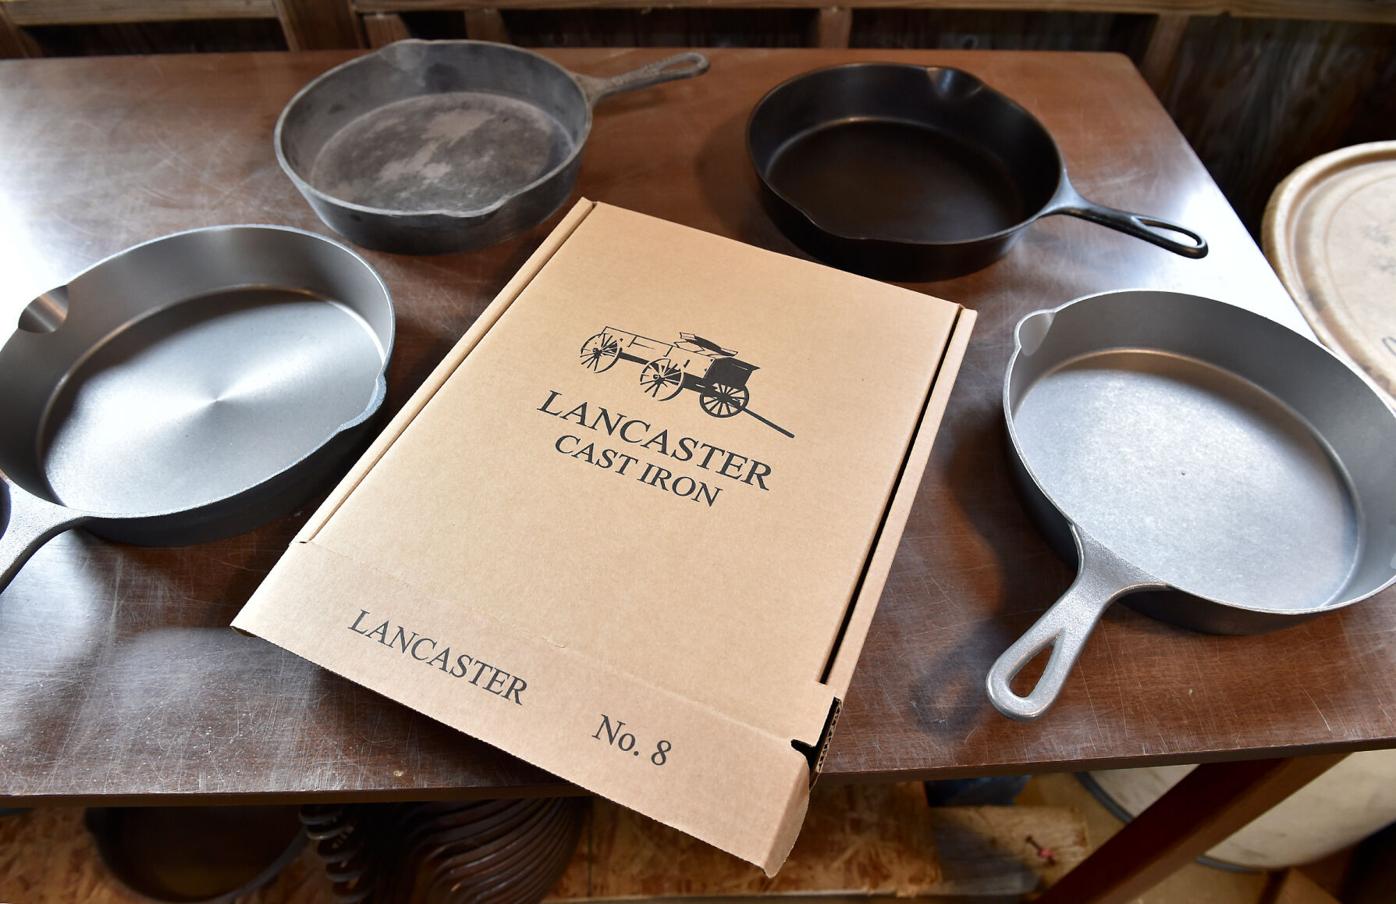 Lancaster No. 8 cast iron cooking review 